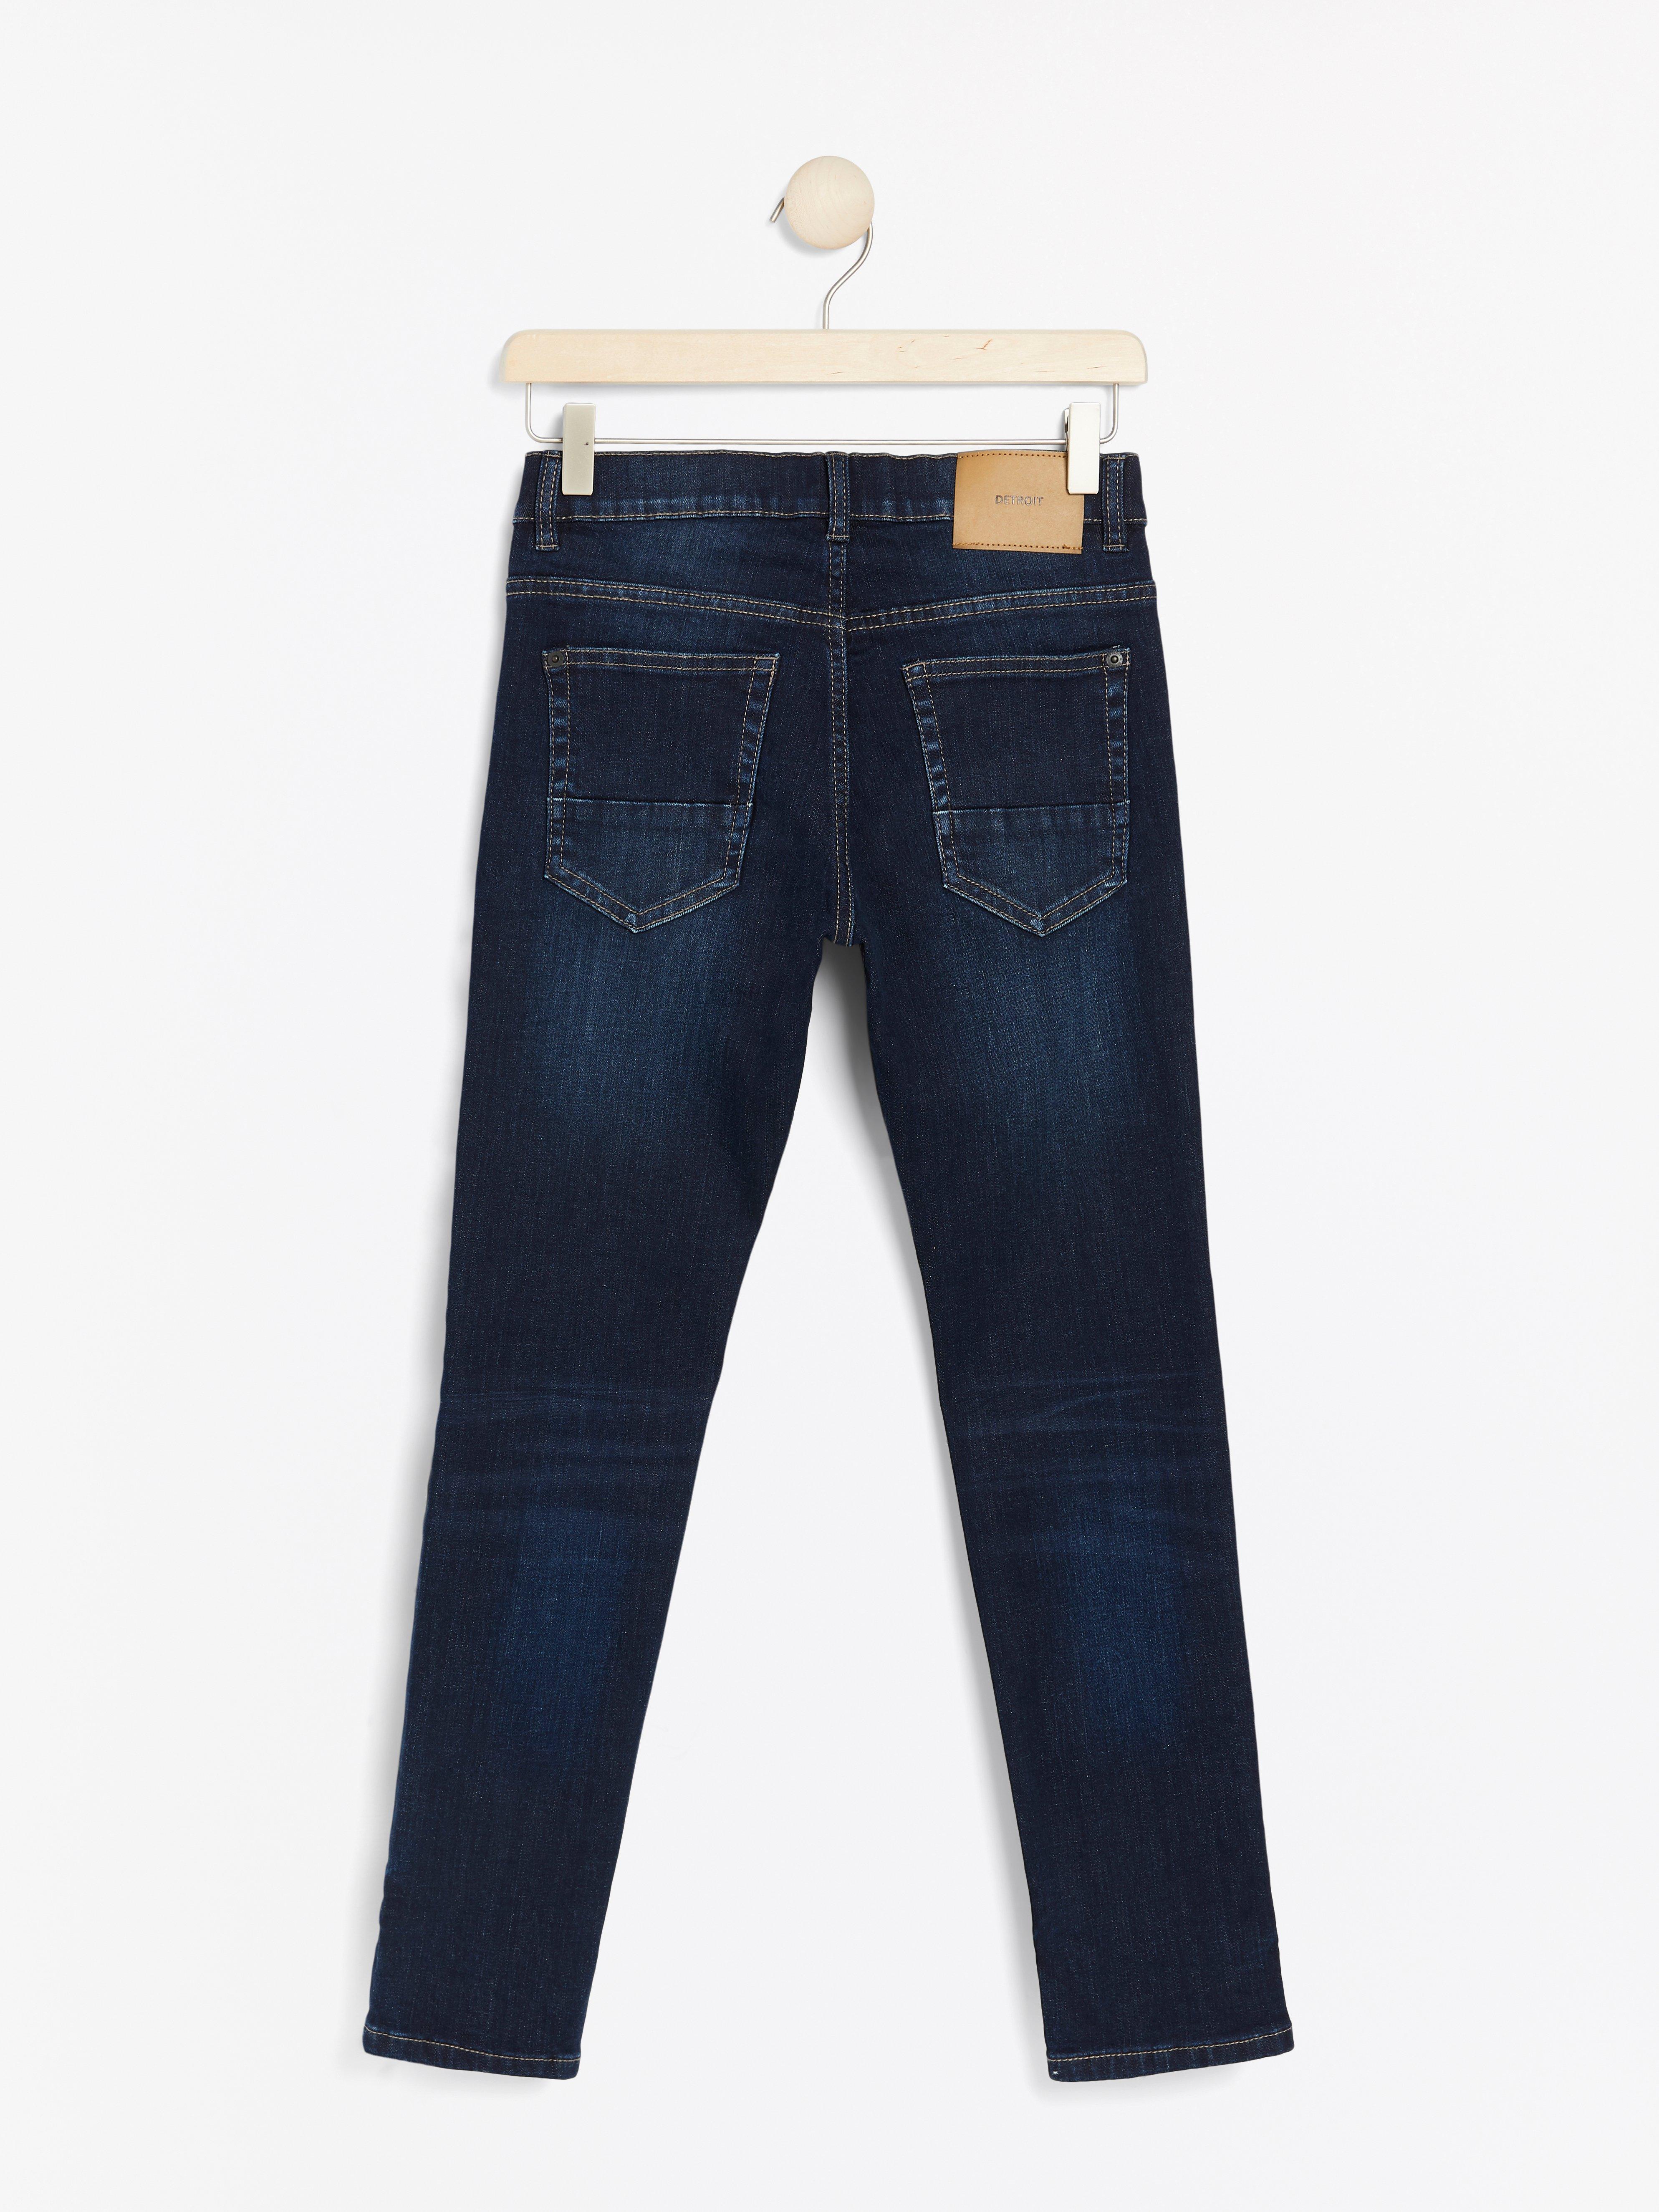 Narrow Fit Dark Blue Jeans Lindex Europe